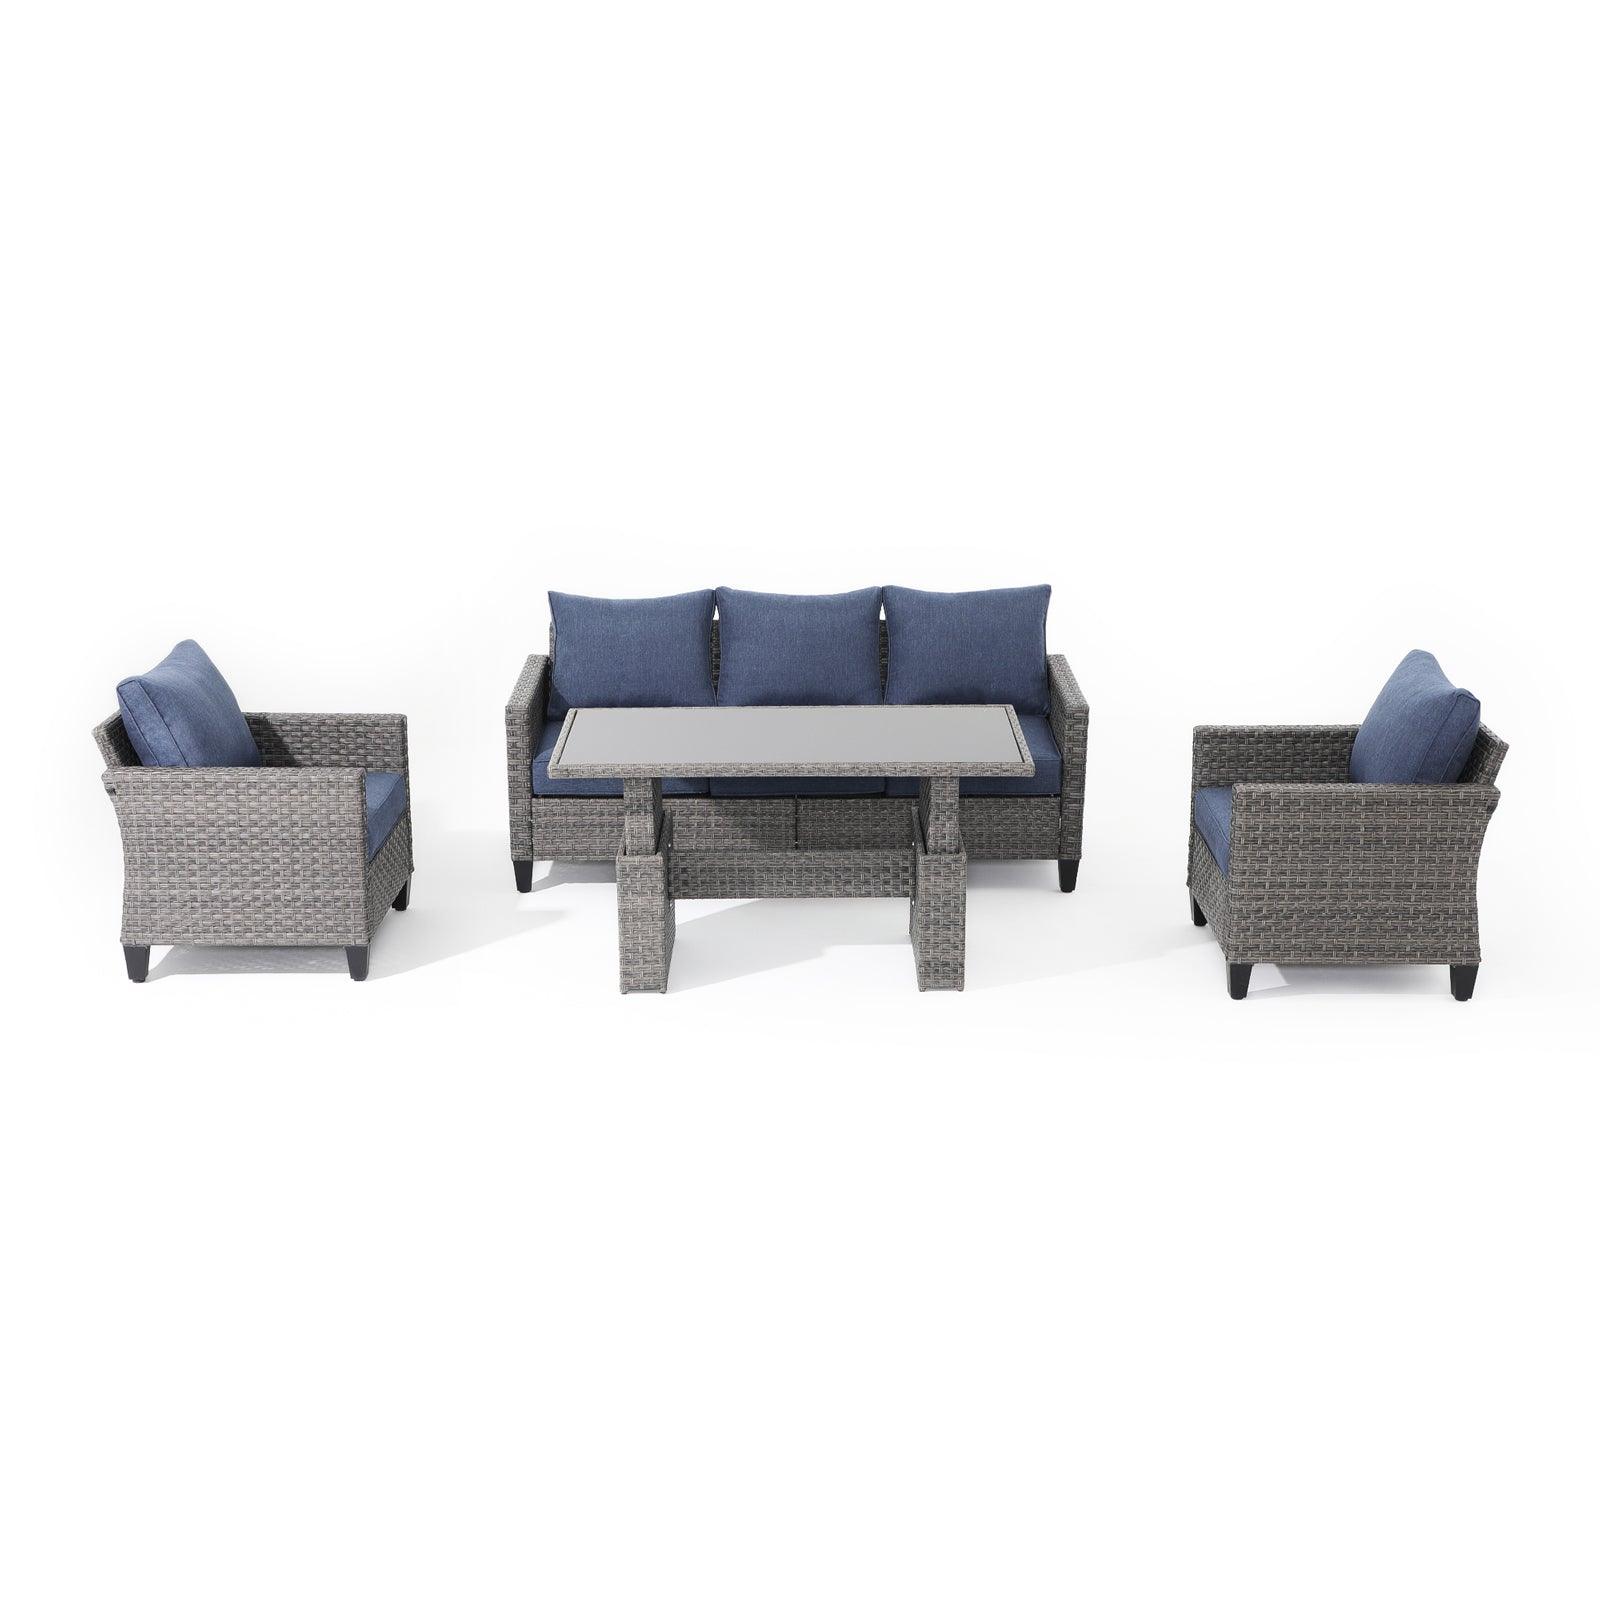 Ayia 4-Piece Grey outdoor Sofa Set with Rattan design, navy blue cushions, a 3-seater sofa, 2 arm chairs ,1 lift-top dining table  - Jardina Furniture #color_Navy Blue#piece_4-pc. with table